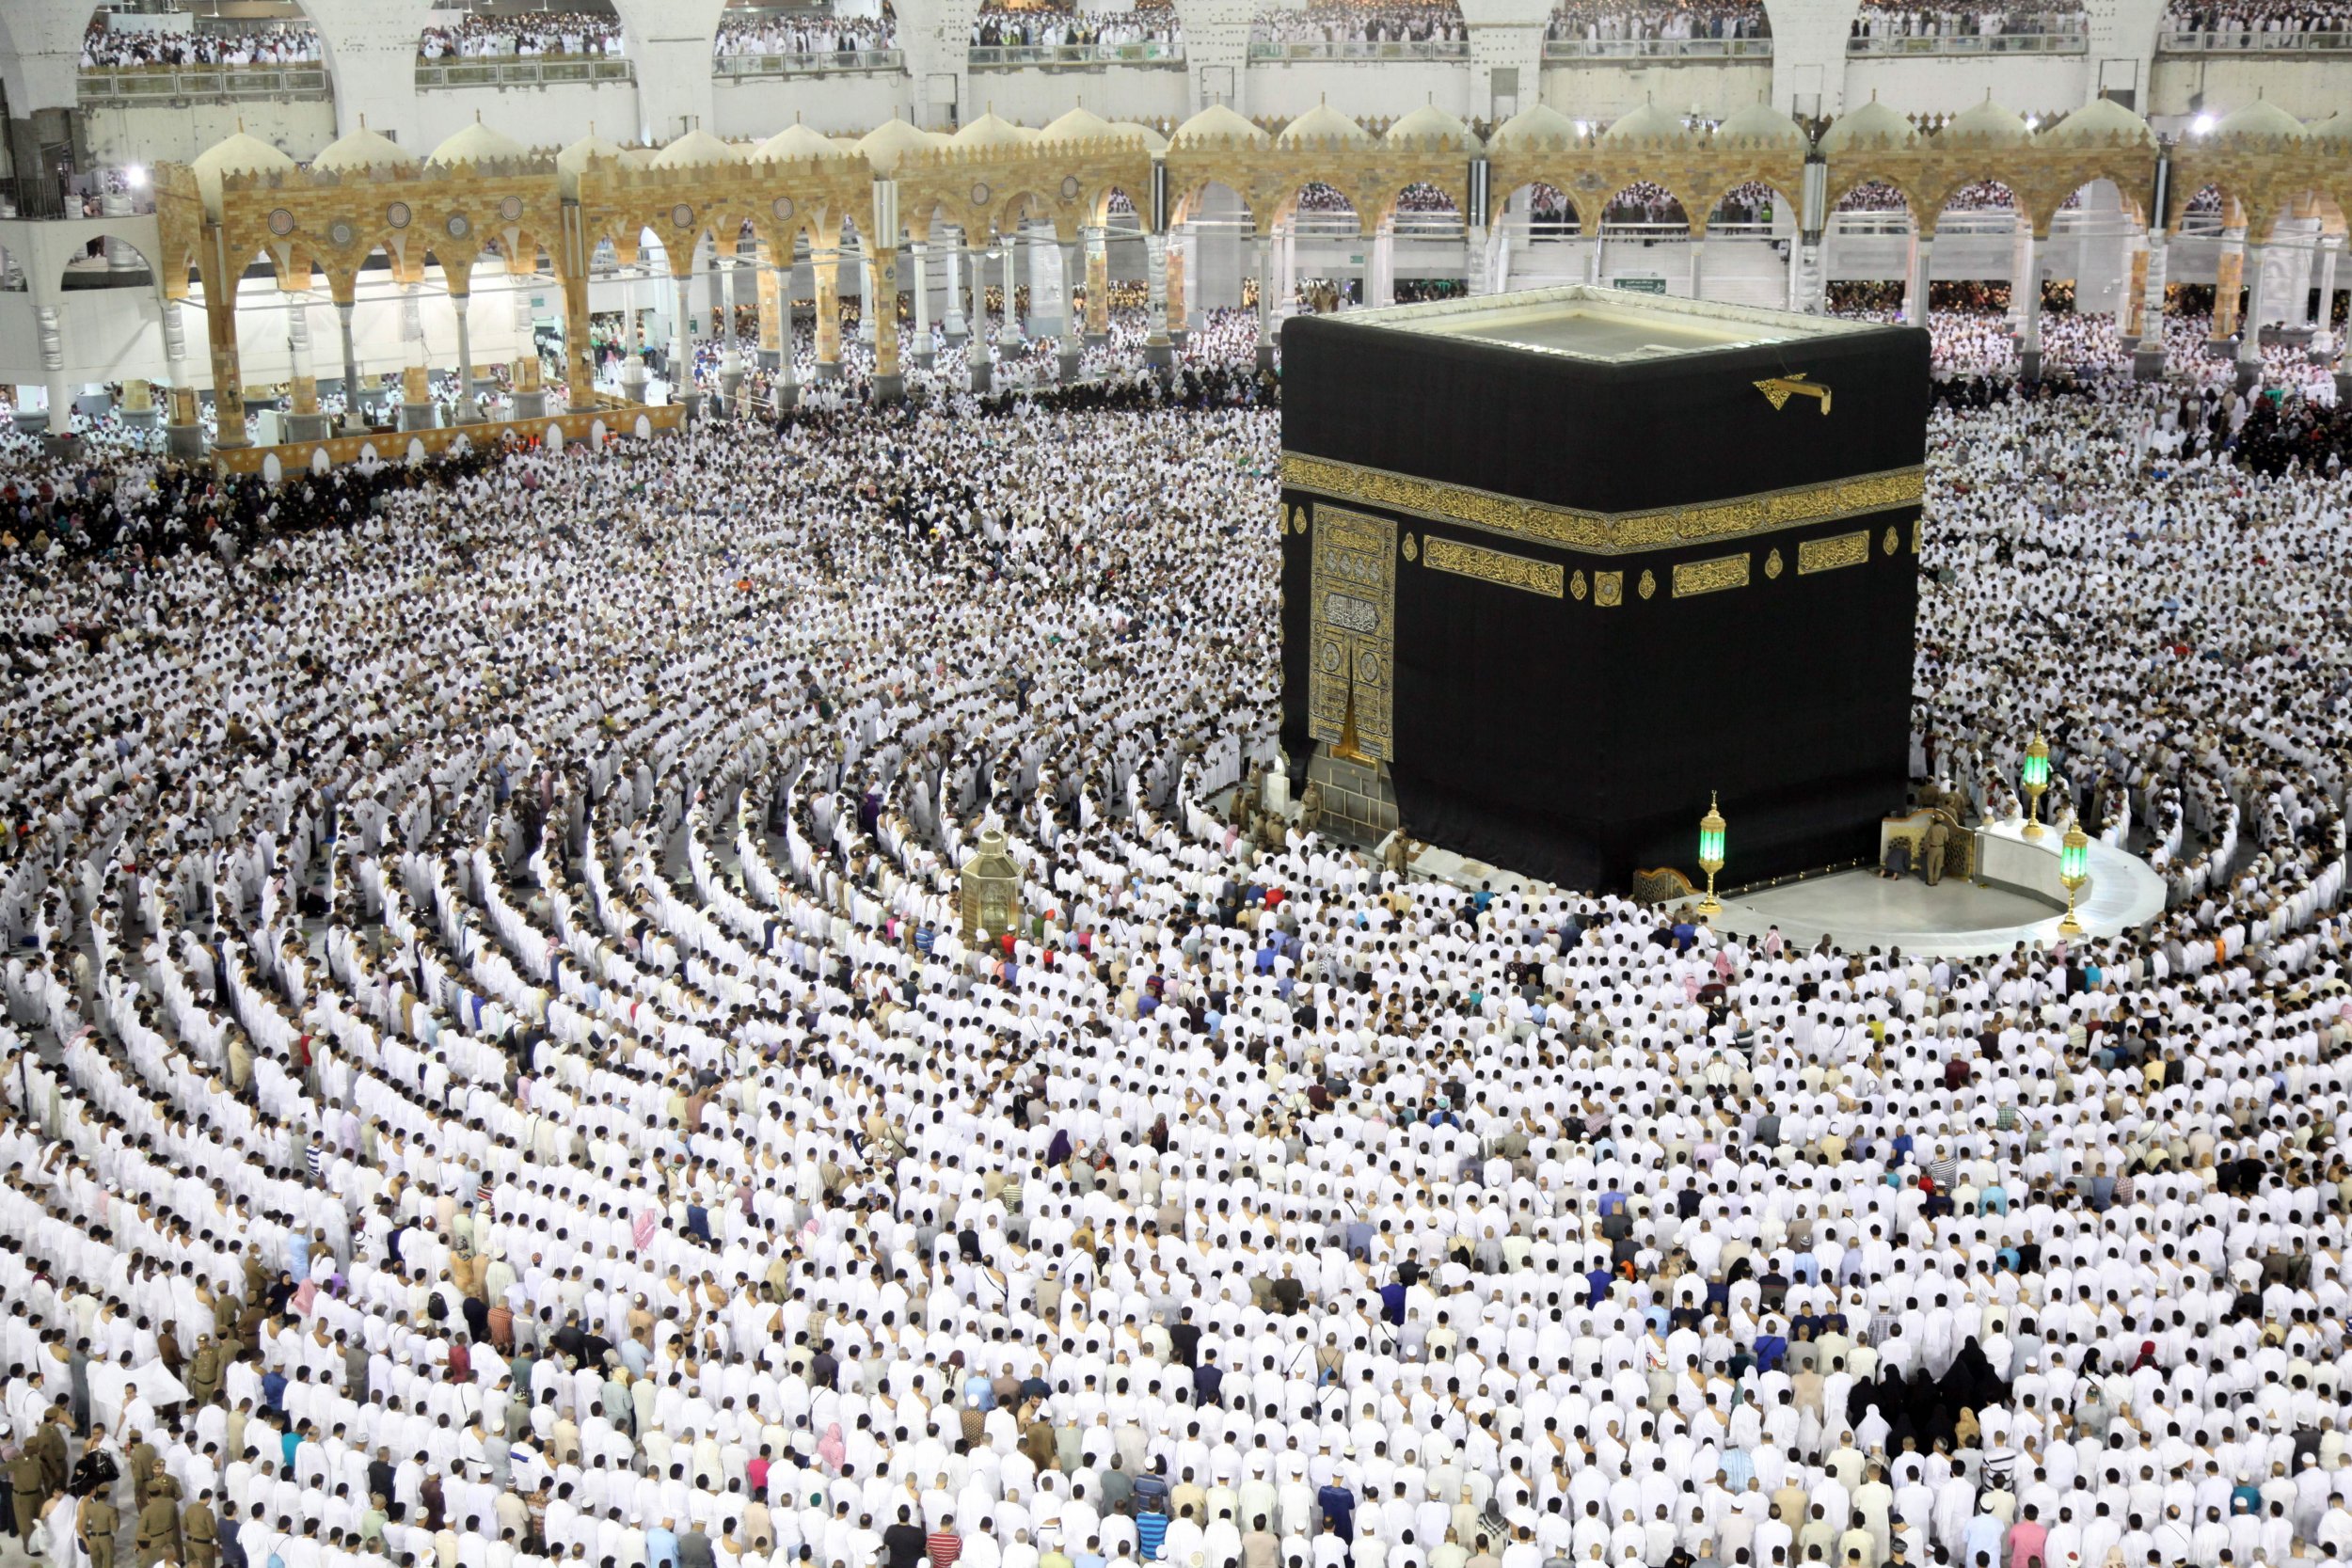 Who built the kaaba